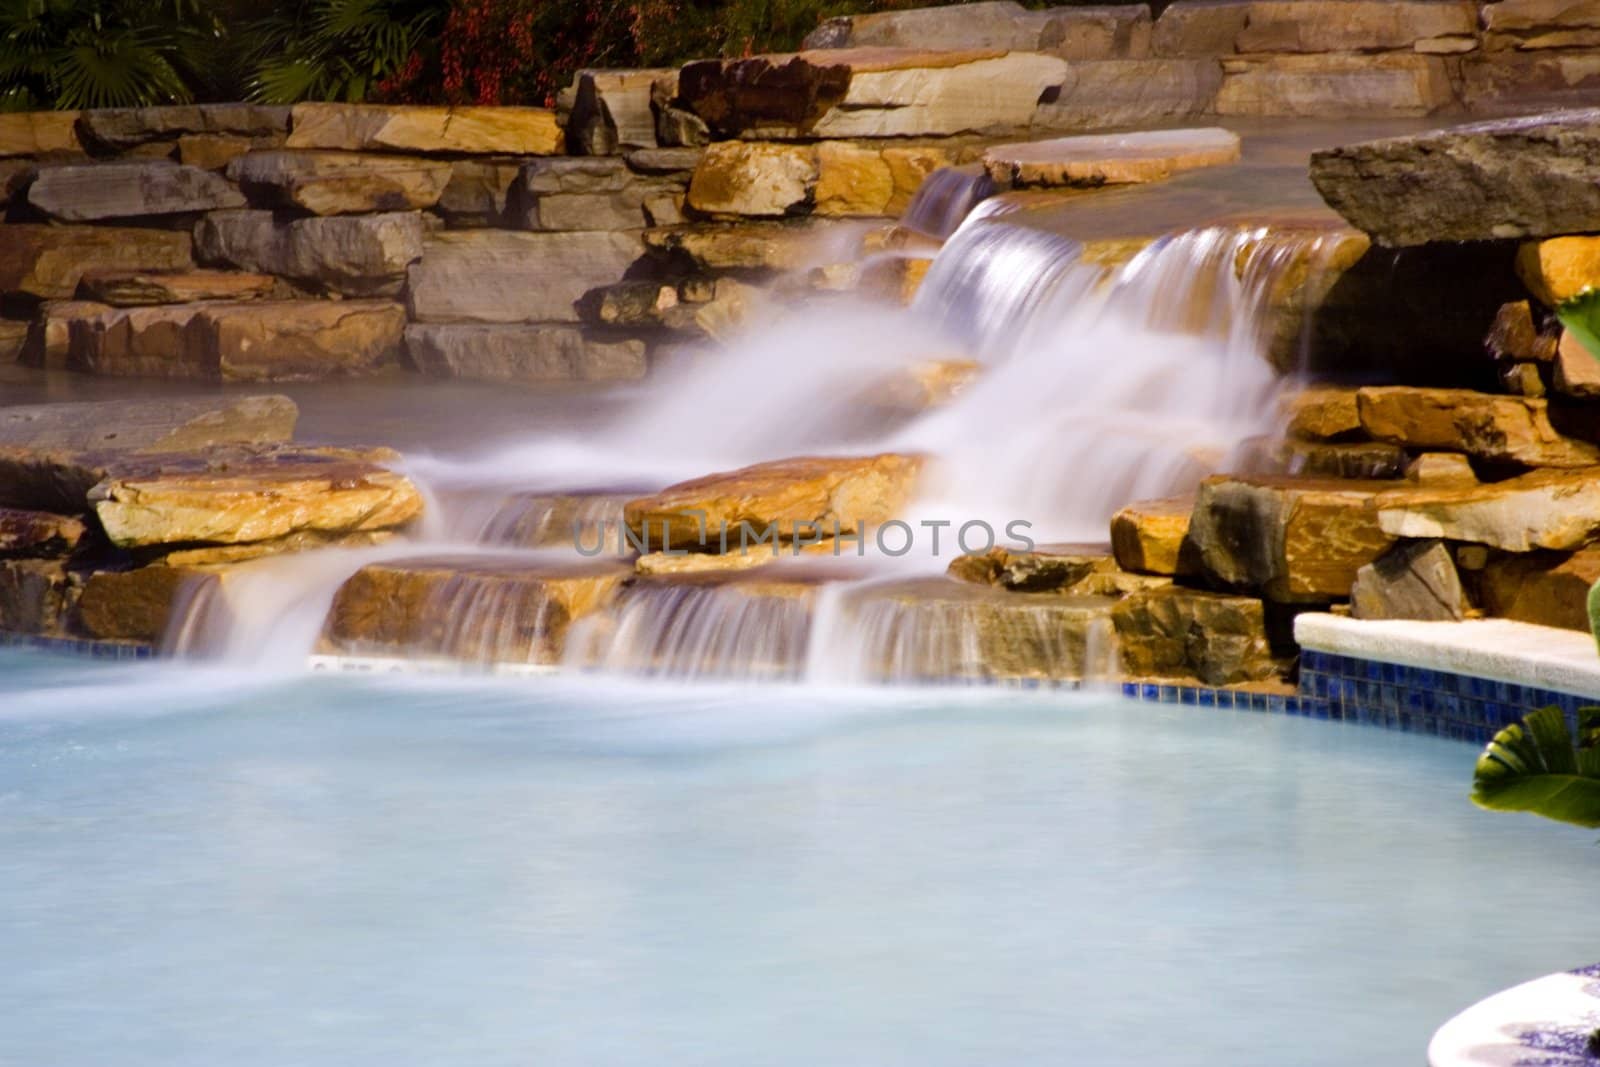 long exposure of water falls entering a rocky vacation resort pool at night